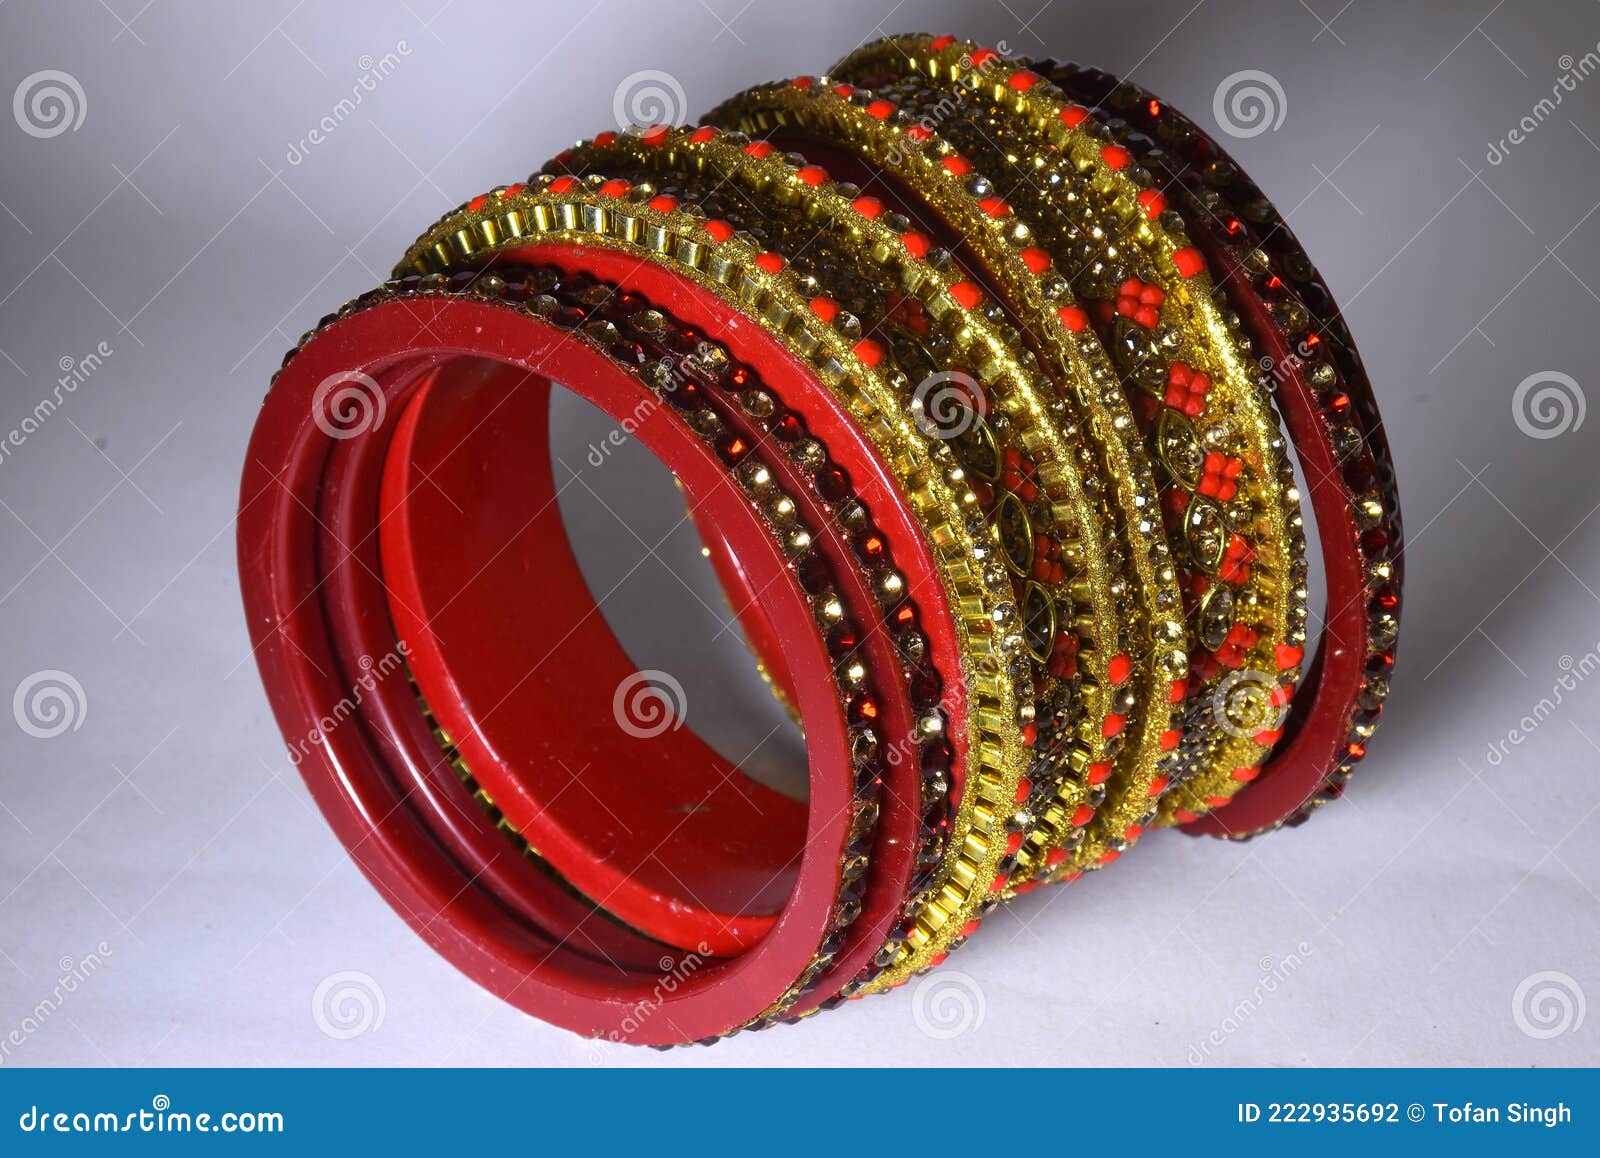 Amazon.com: OM bracelet, red bracelet with bronze tone Om charm, Hindu  symbol, red cord, gift for her, yoga bracelet, lucky charm, minimalist, zen  : Handmade Products